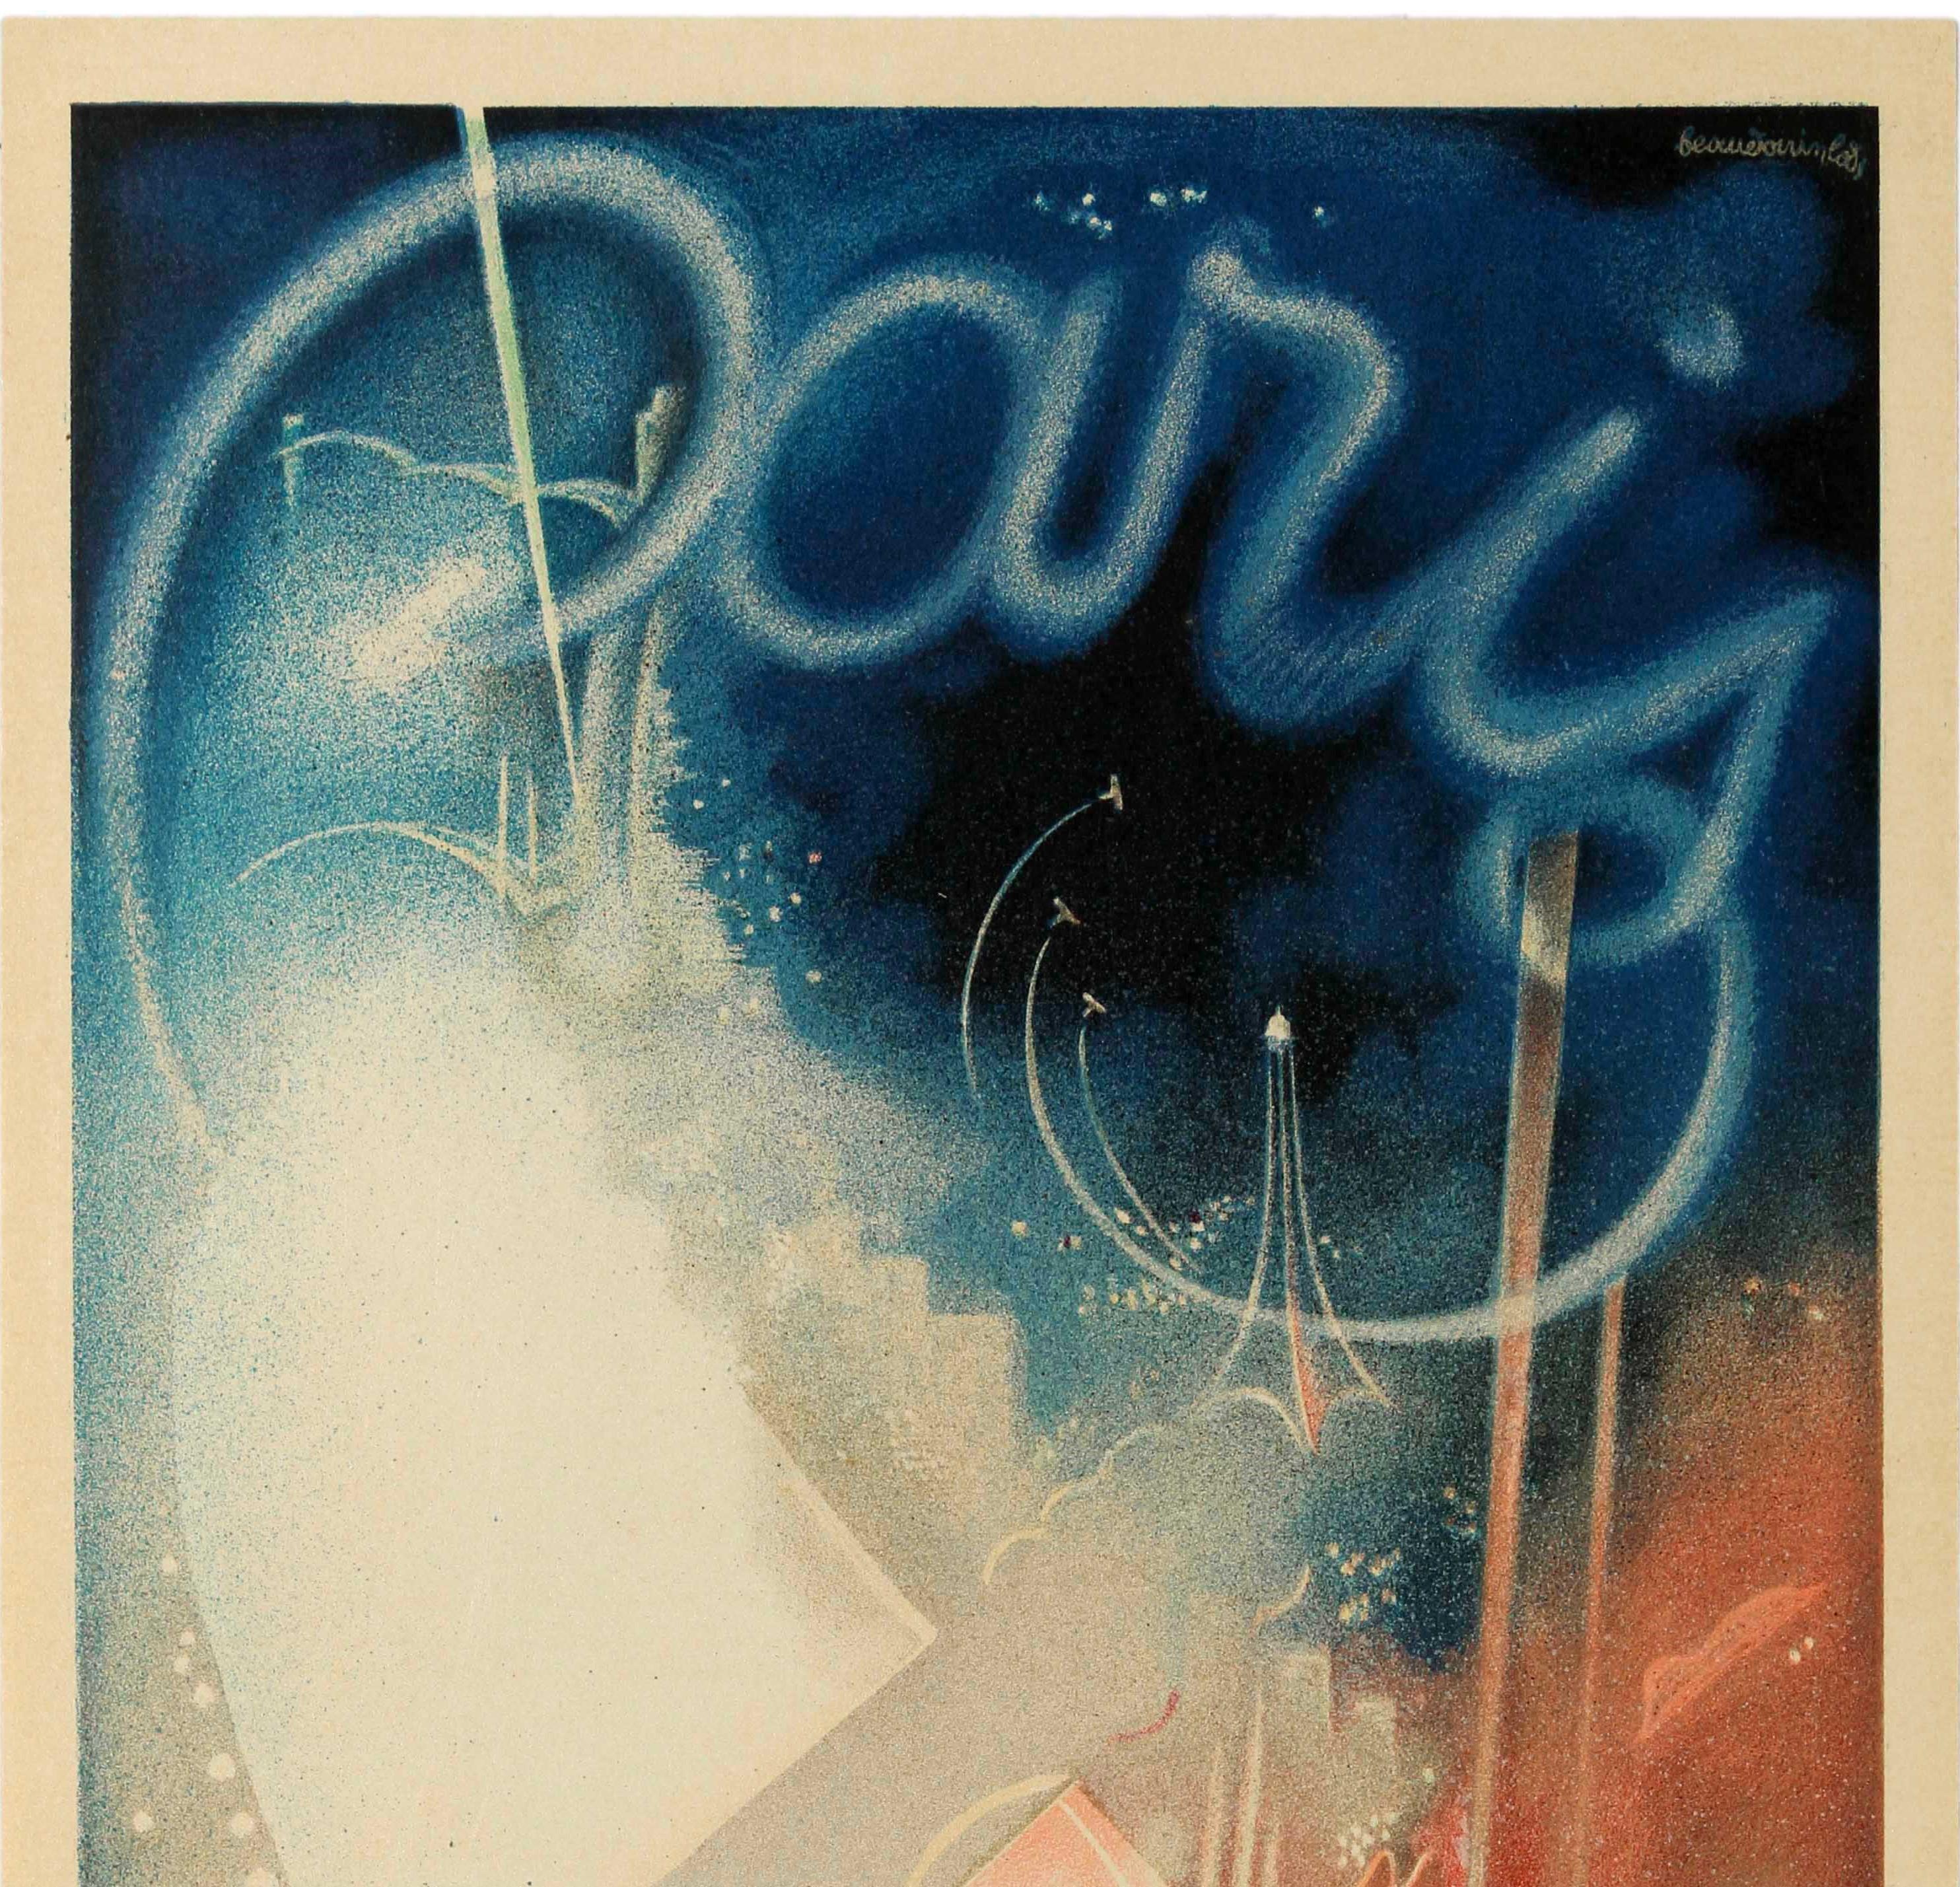 Original Vintage Poster World's Fair Paris 1937 Exposition Internationale France - Print by E. Beaudoin and M. Lods